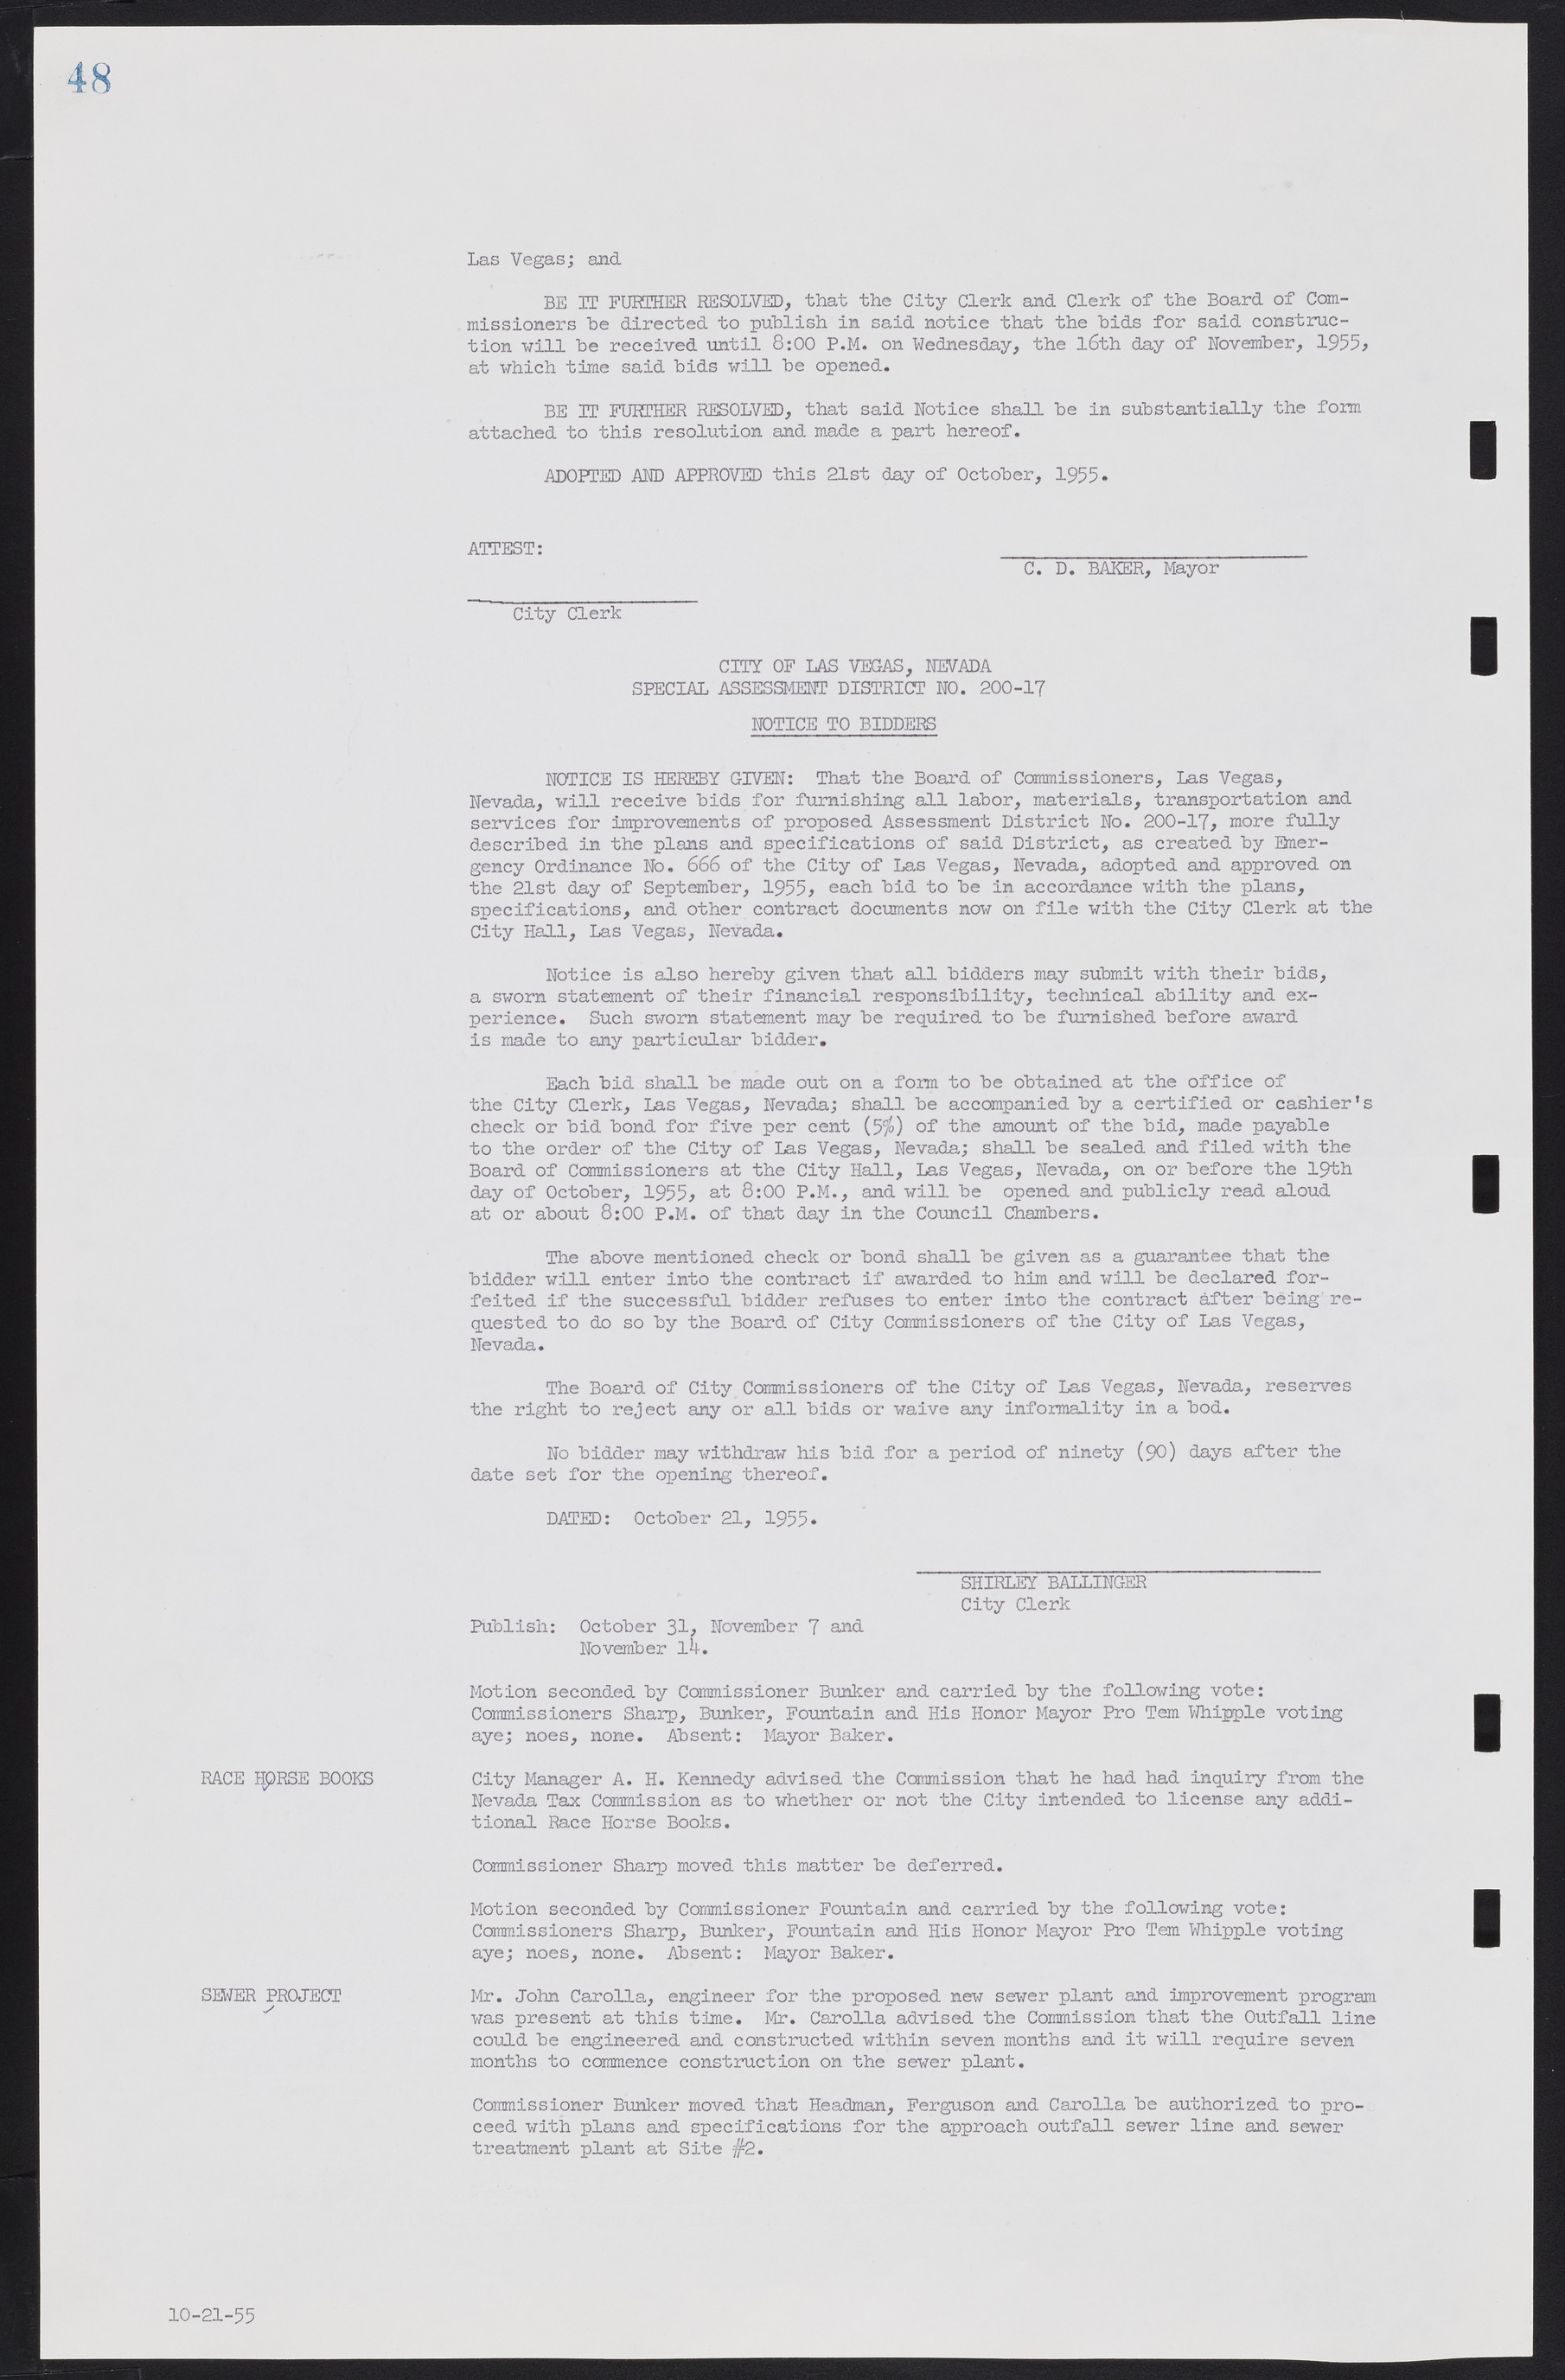 Las Vegas City Commission Minutes, September 21, 1955 to November 20, 1957, lvc000010-54